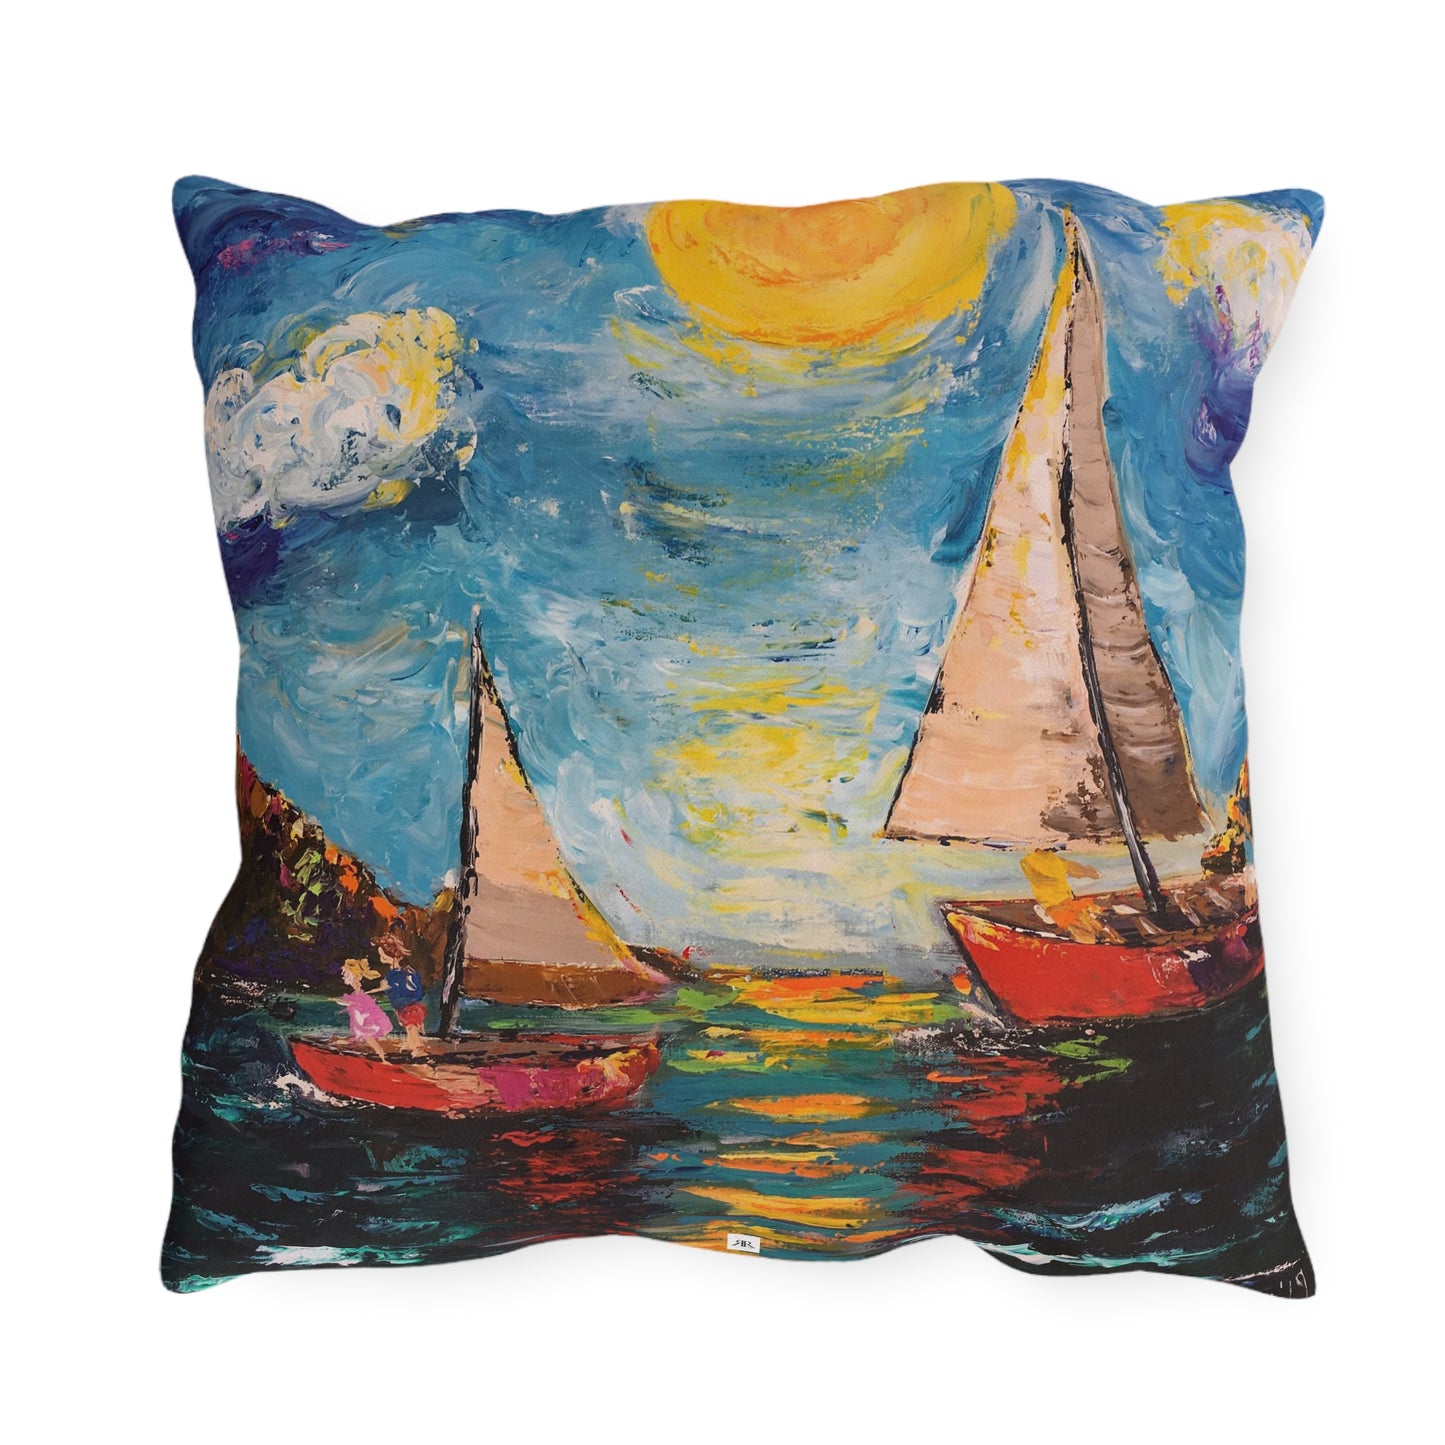 Sunny Sails Outdoor Pillows